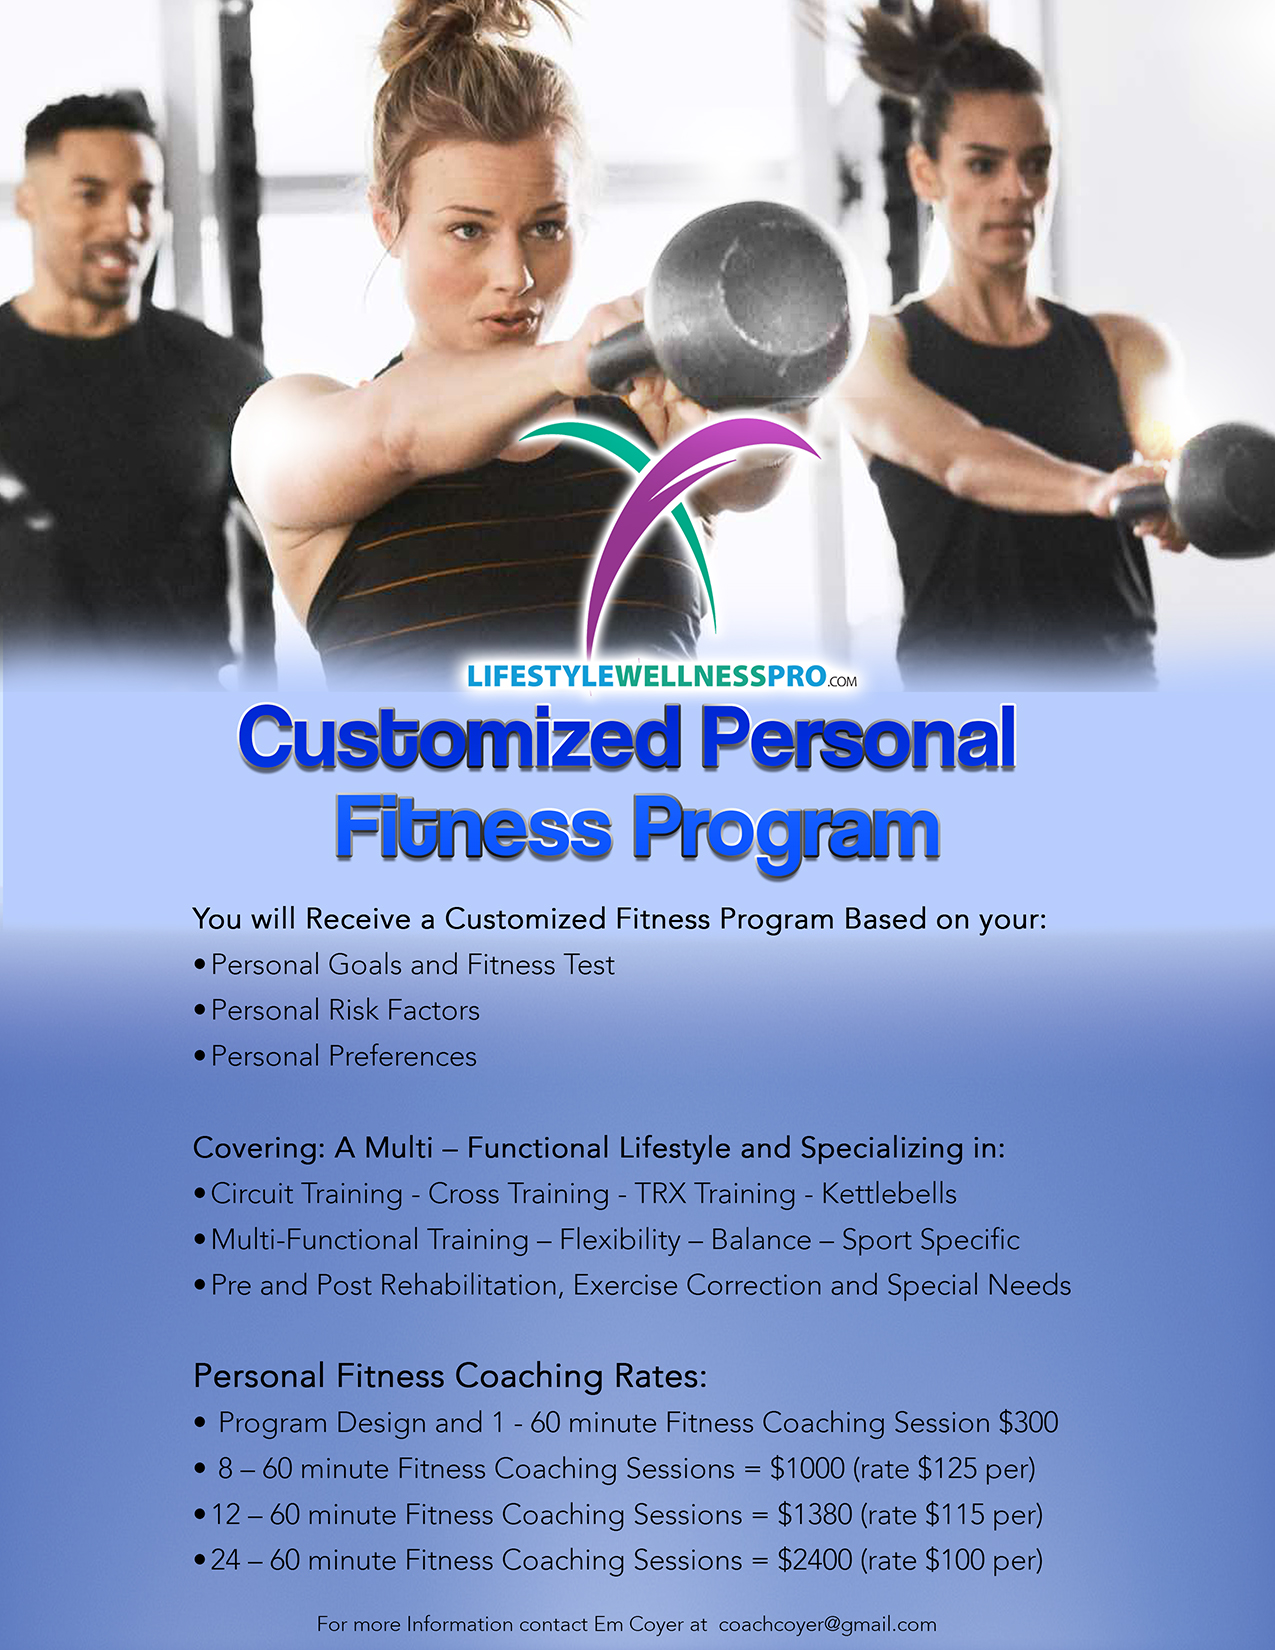 Customized Personal Fitness Program flyer